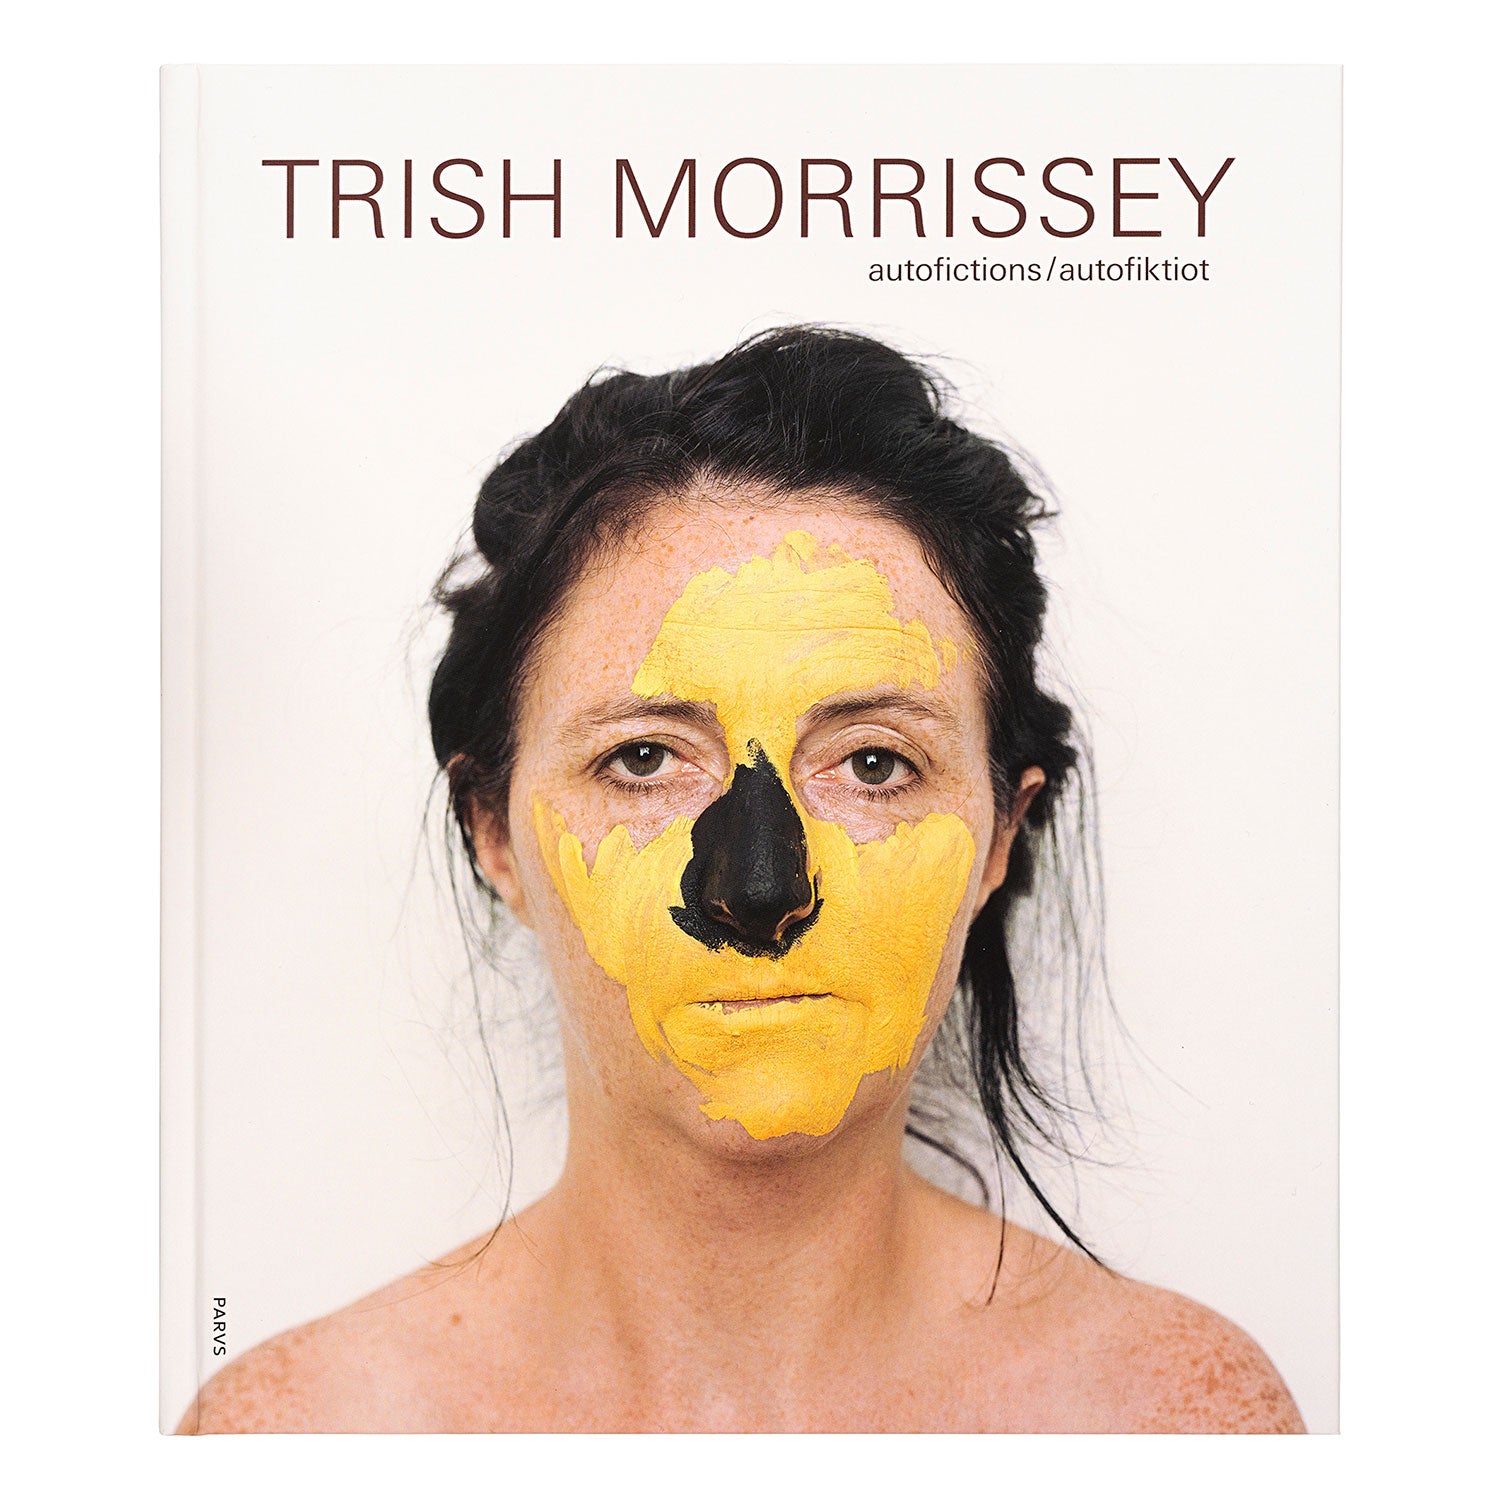 Signed copies of Autofictions by Trish Morrissey Photo Museum Ireland